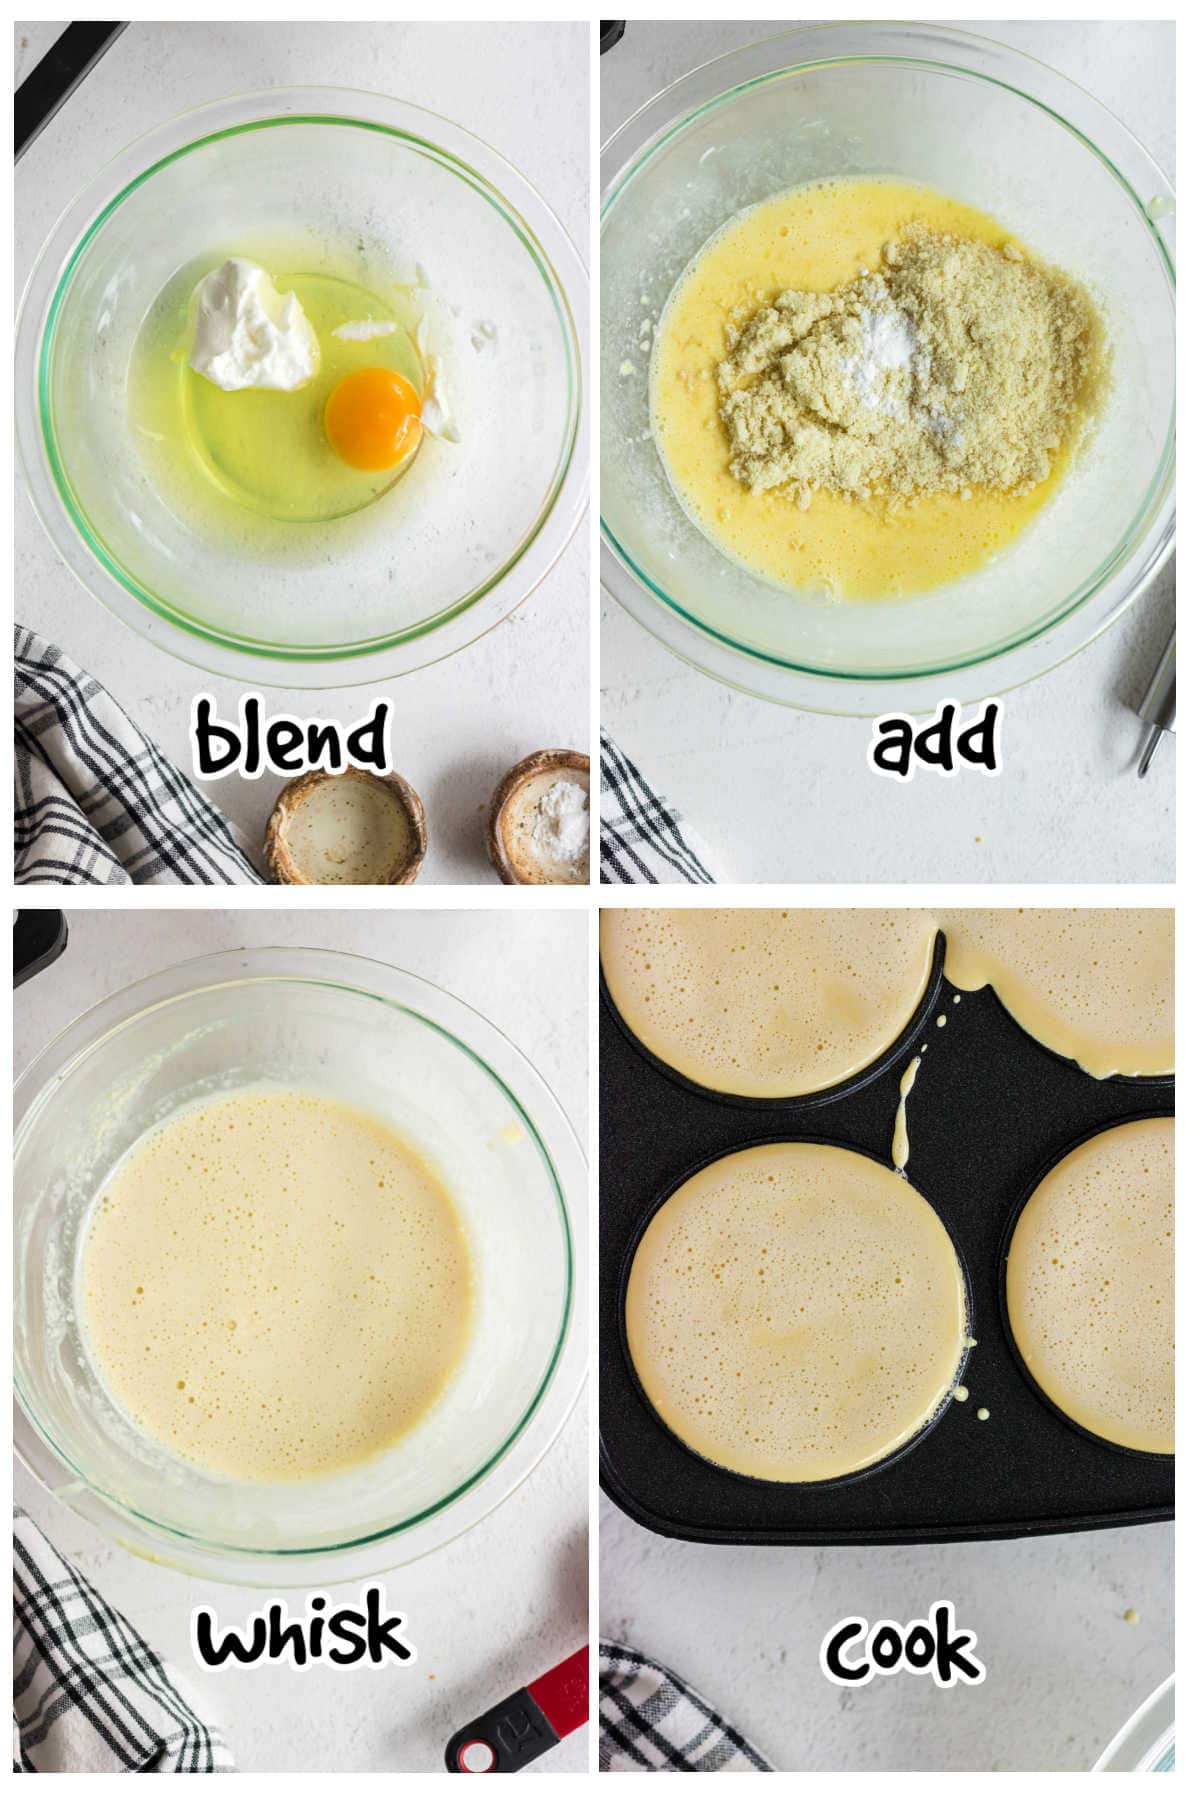 Best Tasting White Wonder Bread Chaffle Recipe; Keto - Intentional